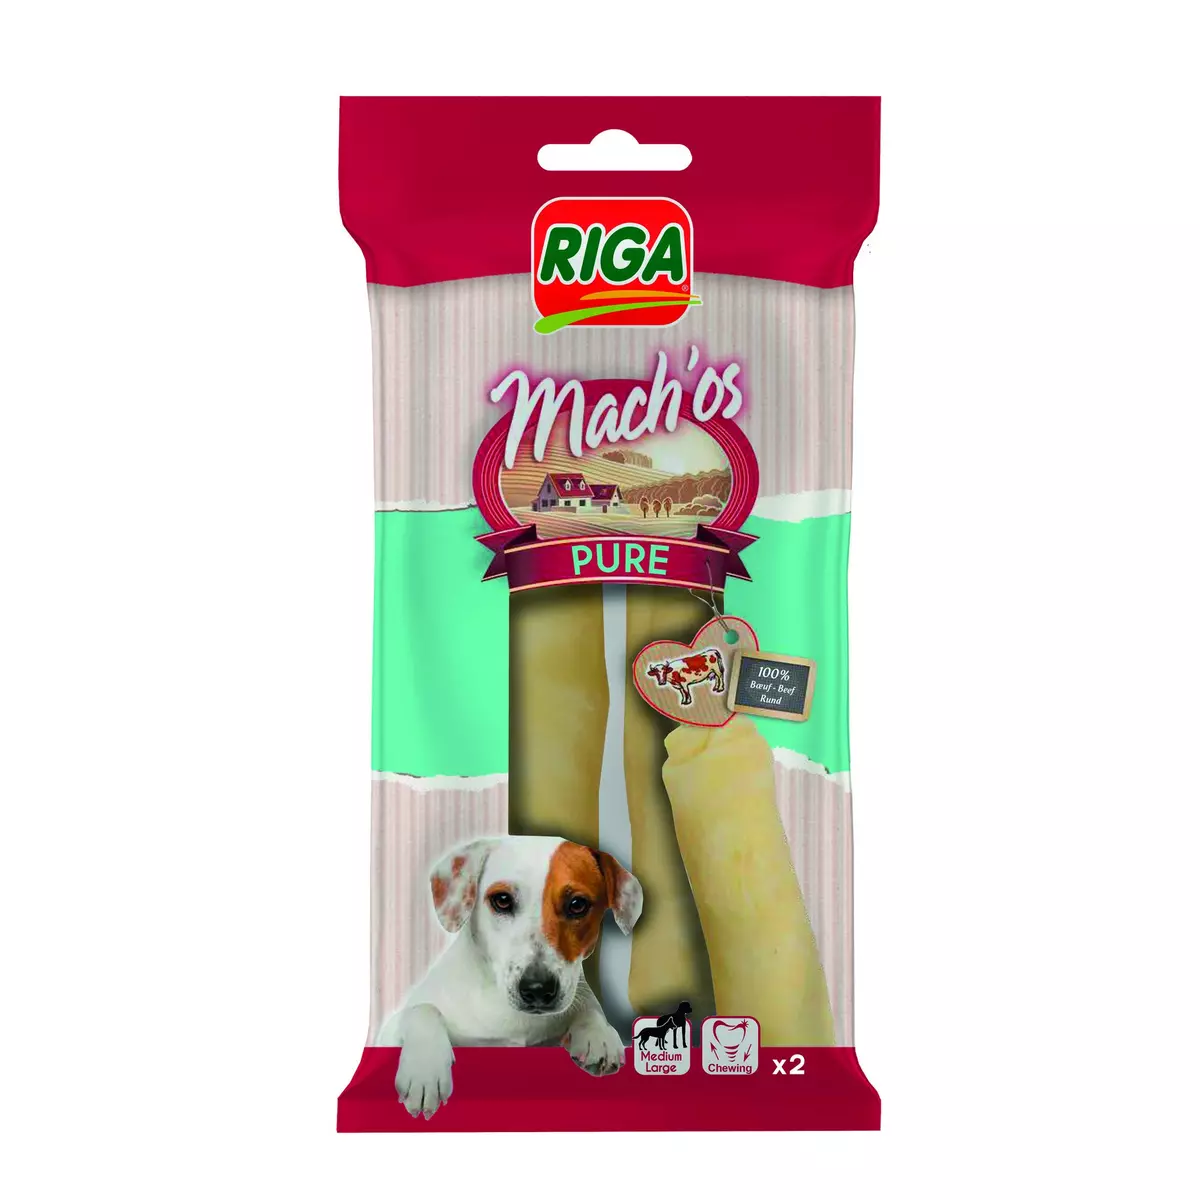 RIGA Mach'os pure barre soufflée blanche boeuf pour moyen et grand chien 2 os 110g